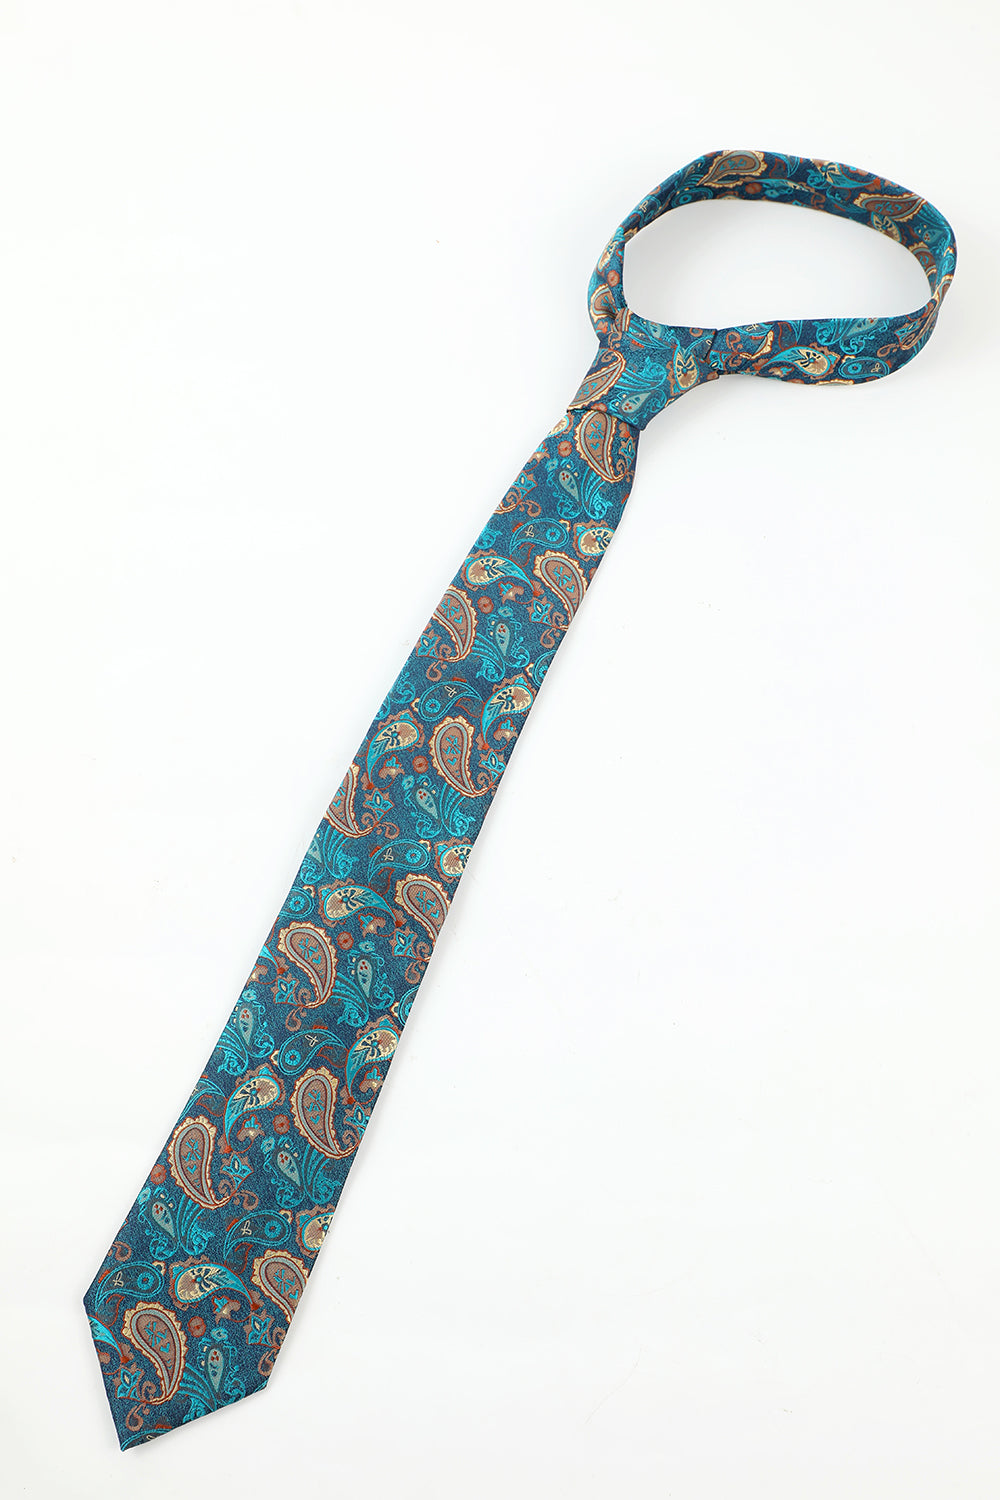 Lake Blue Jacquard Men's 5-Piece Accessory Set Tie and Bow Tie Pocket Square Flower Lapel Pin Tie Clip